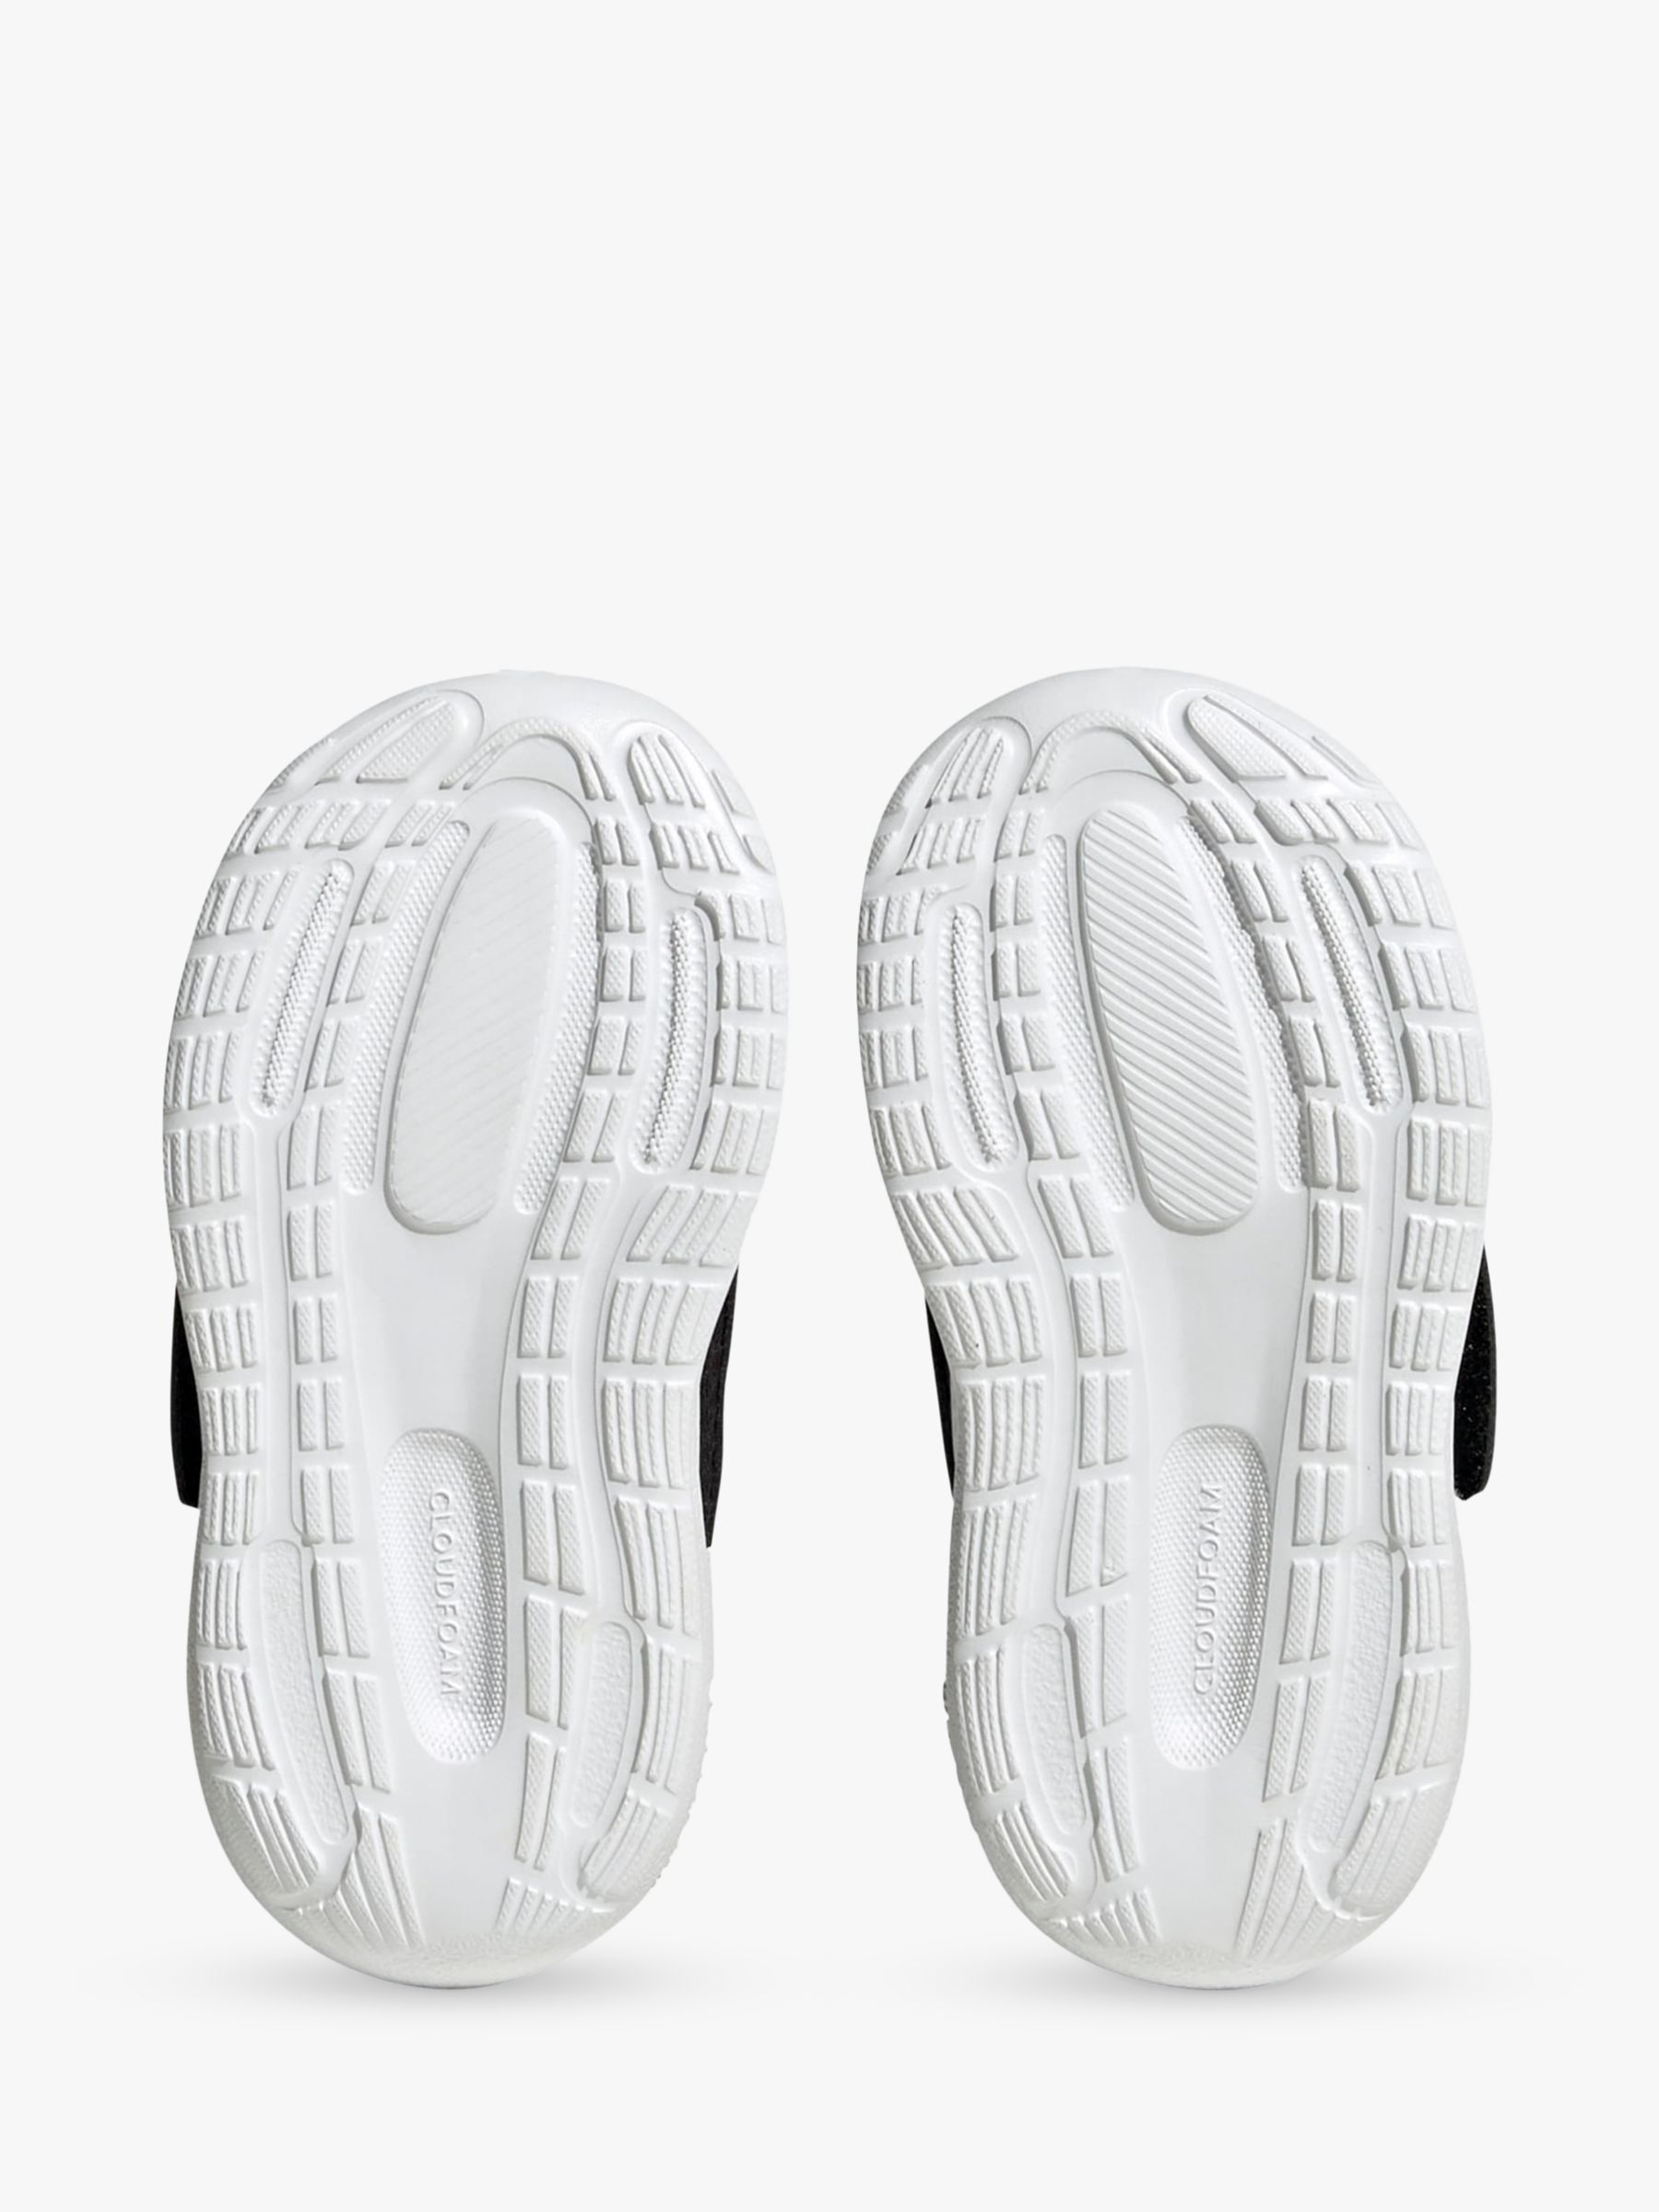 adidas Baby Runfalcon 3.0 Running Shoes, Black, 9 Jnr